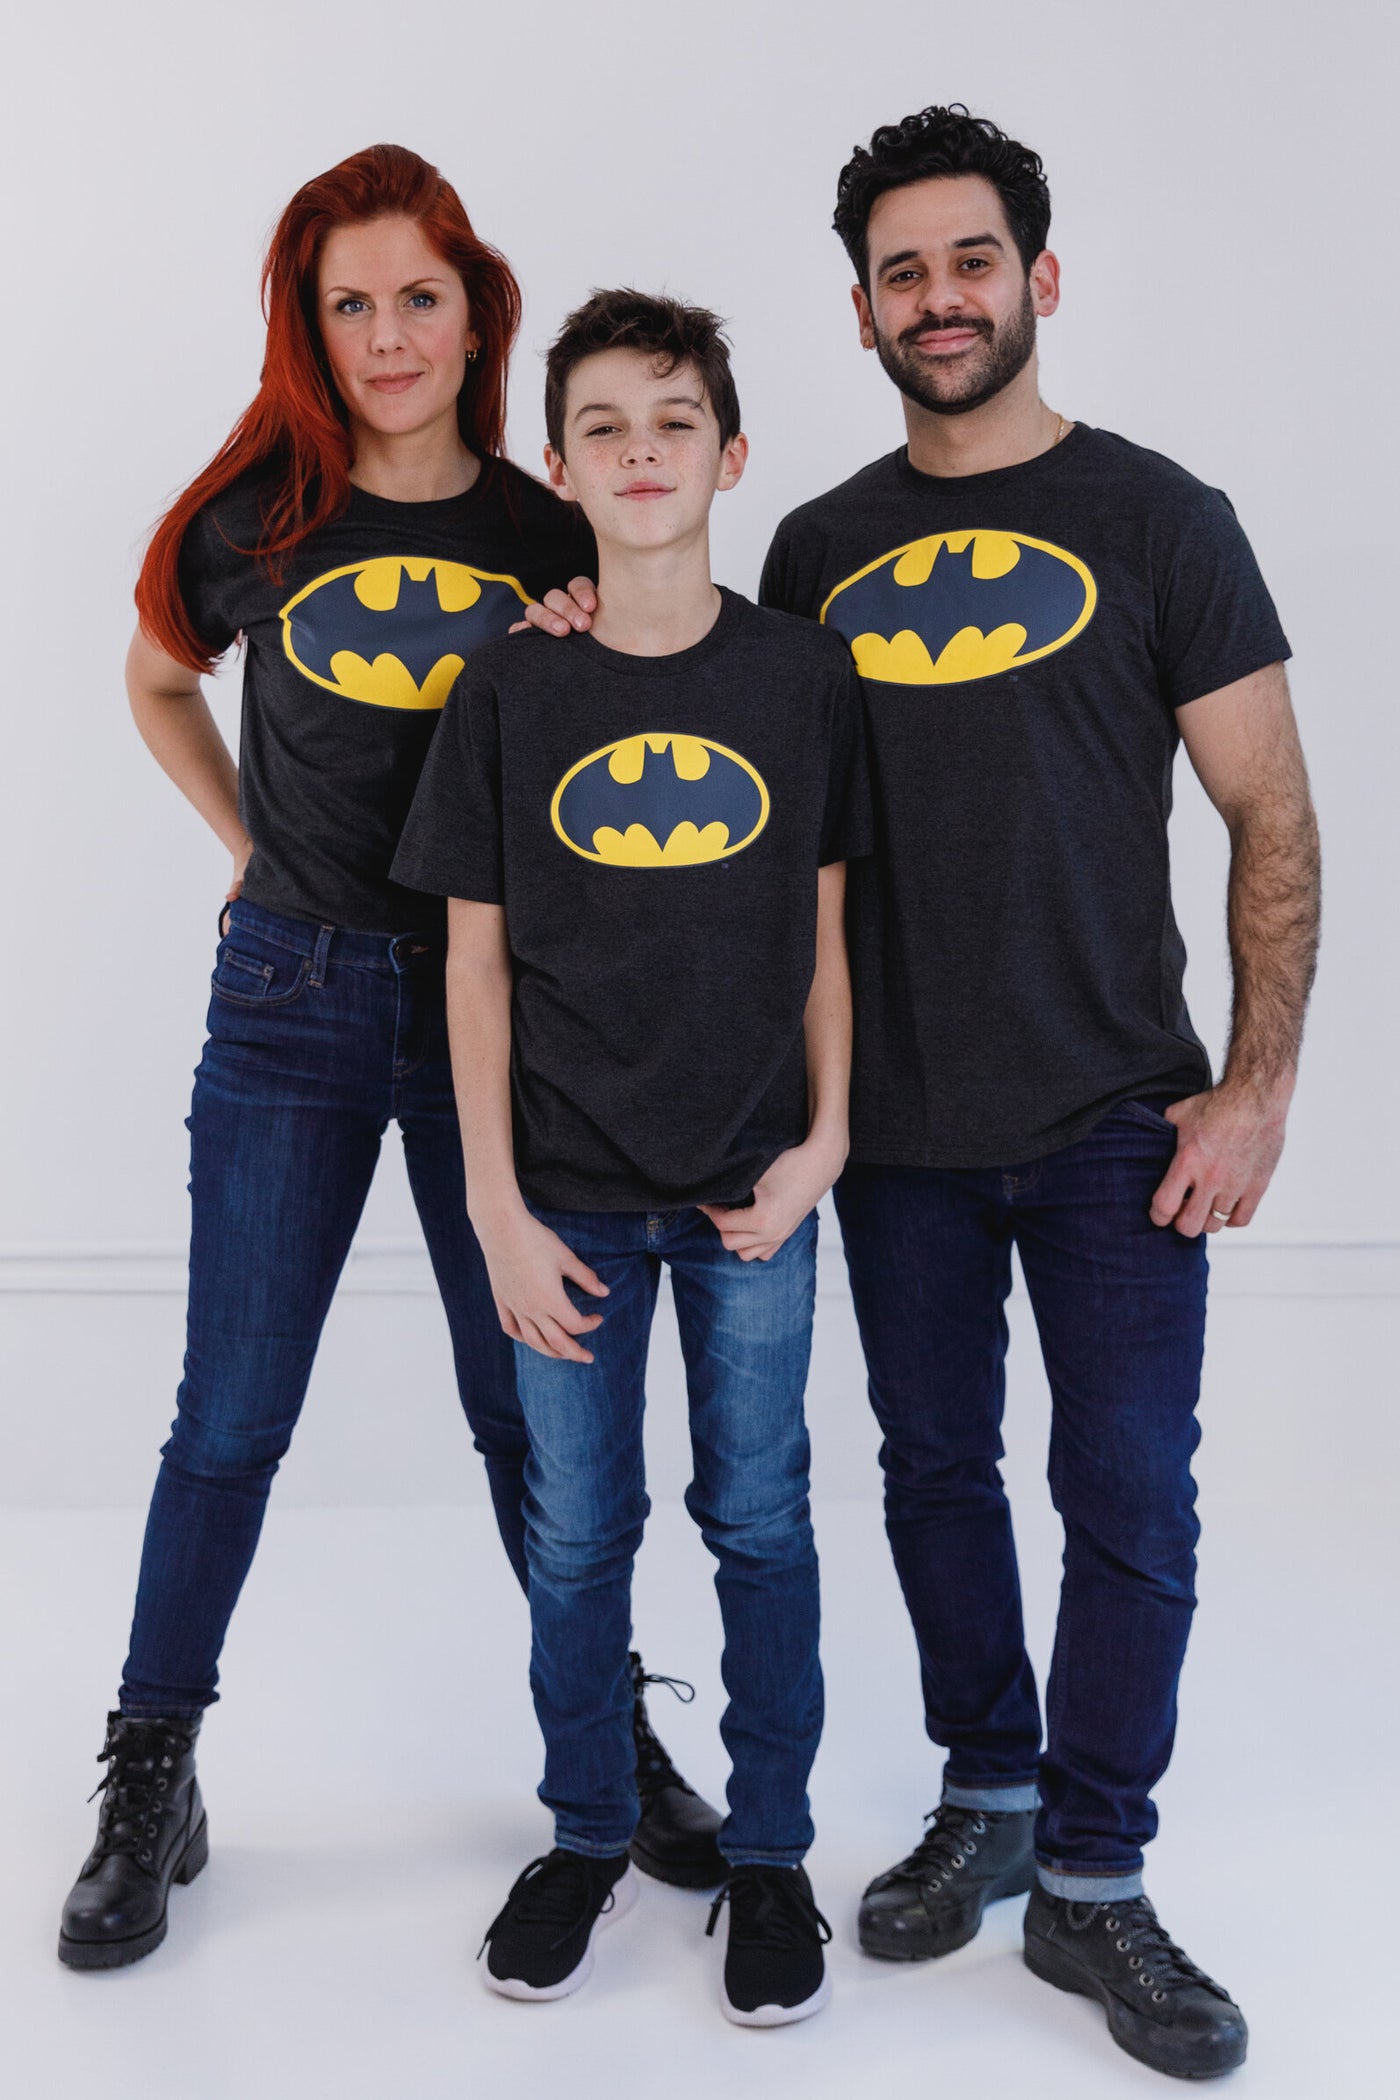 DC Comics Batman Matching Family T-Shirt